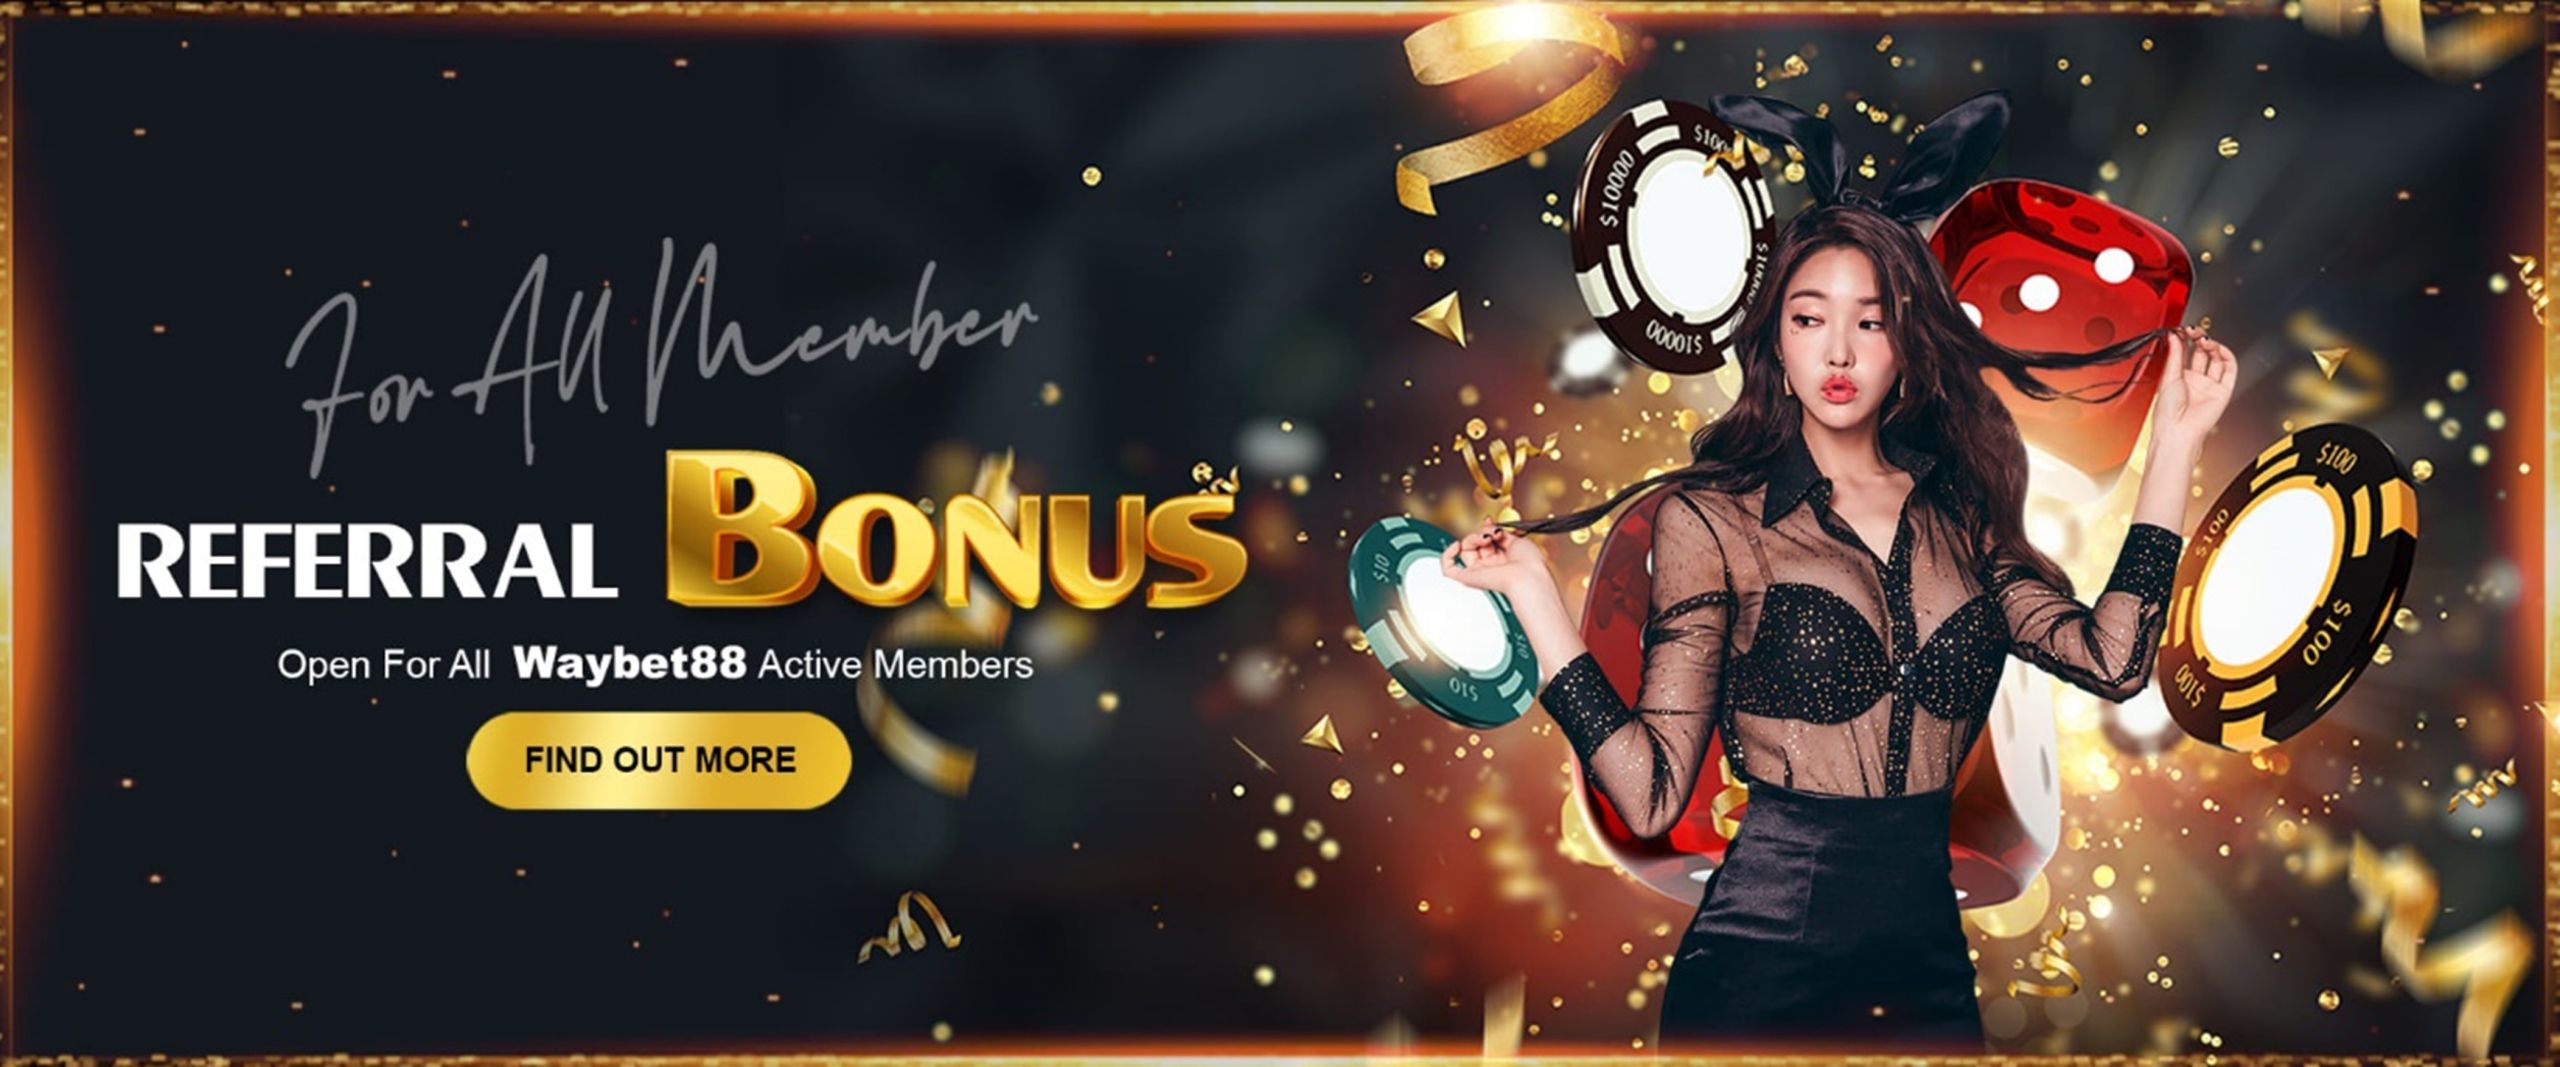 Online Casino Referral Bonuses